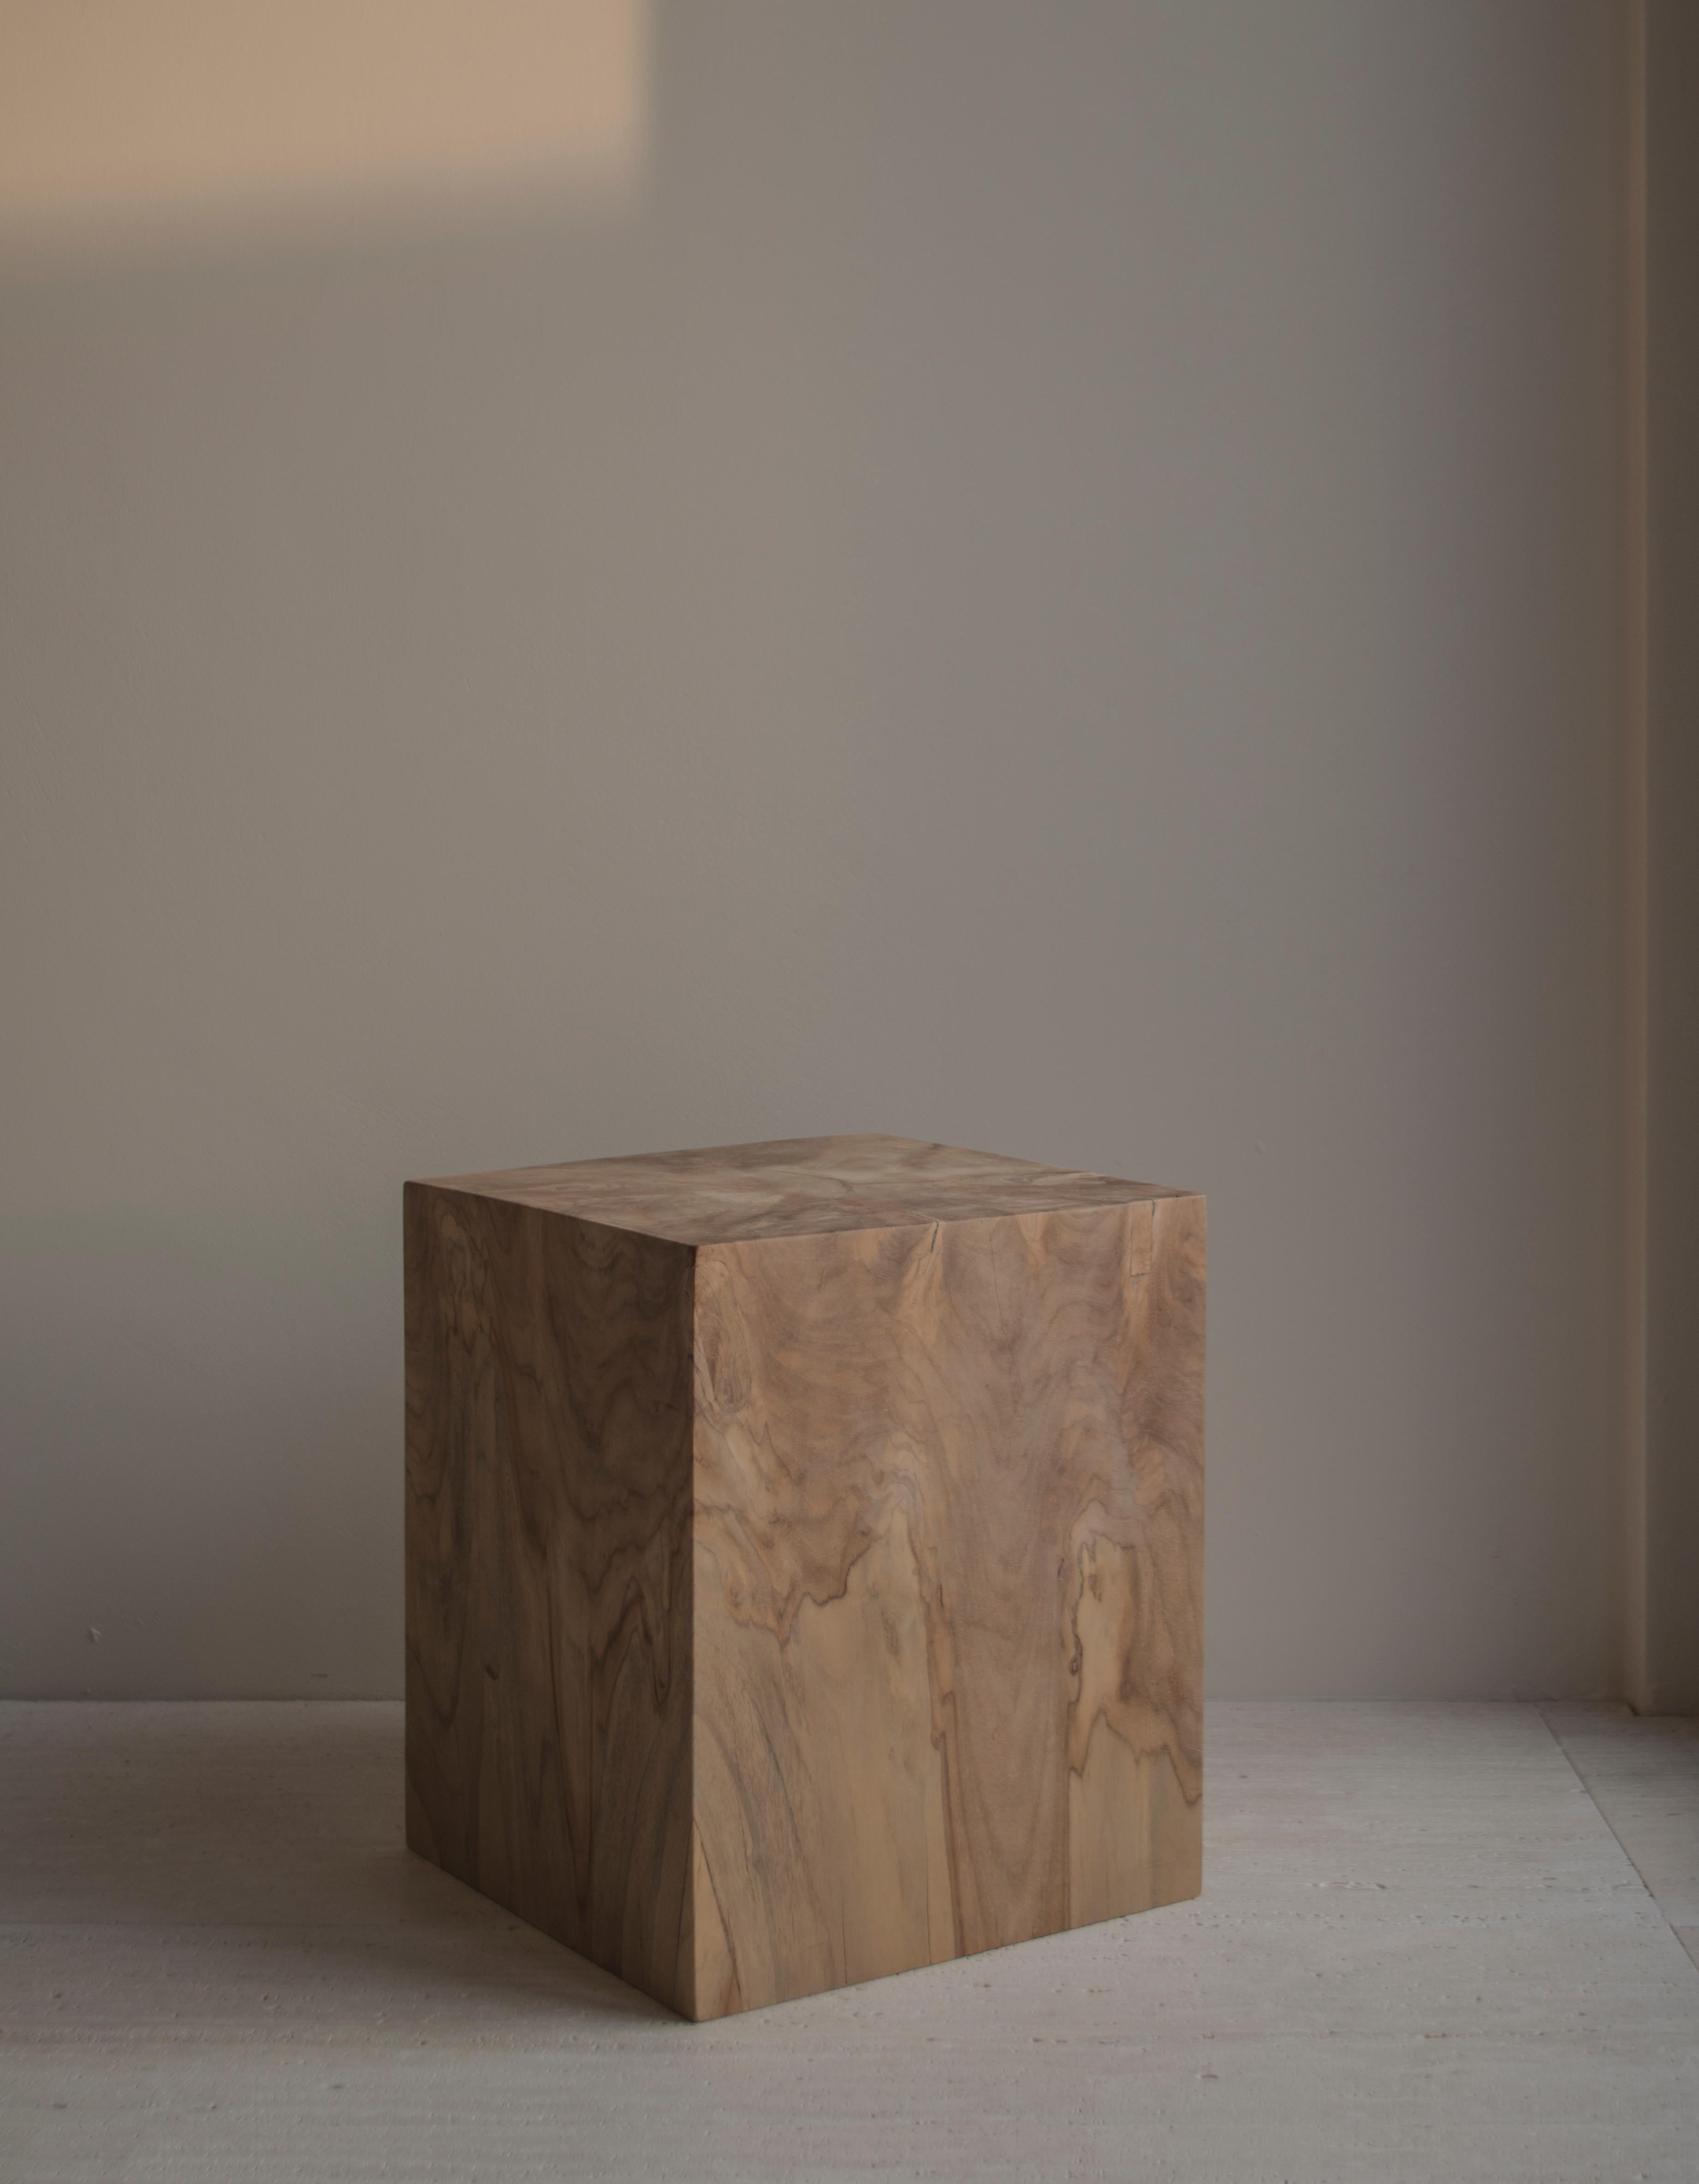 Block side stool by Bicci de' Medici Studio
Dimensions: 35 x 35 x H 40 cm
Materials: Natural untreated Teak (Solid).
Technique: Carved wood. Handmade. Unfinished. 

Designer's Biography: 

Bicci de’ Medici manufactures Exclusive Design